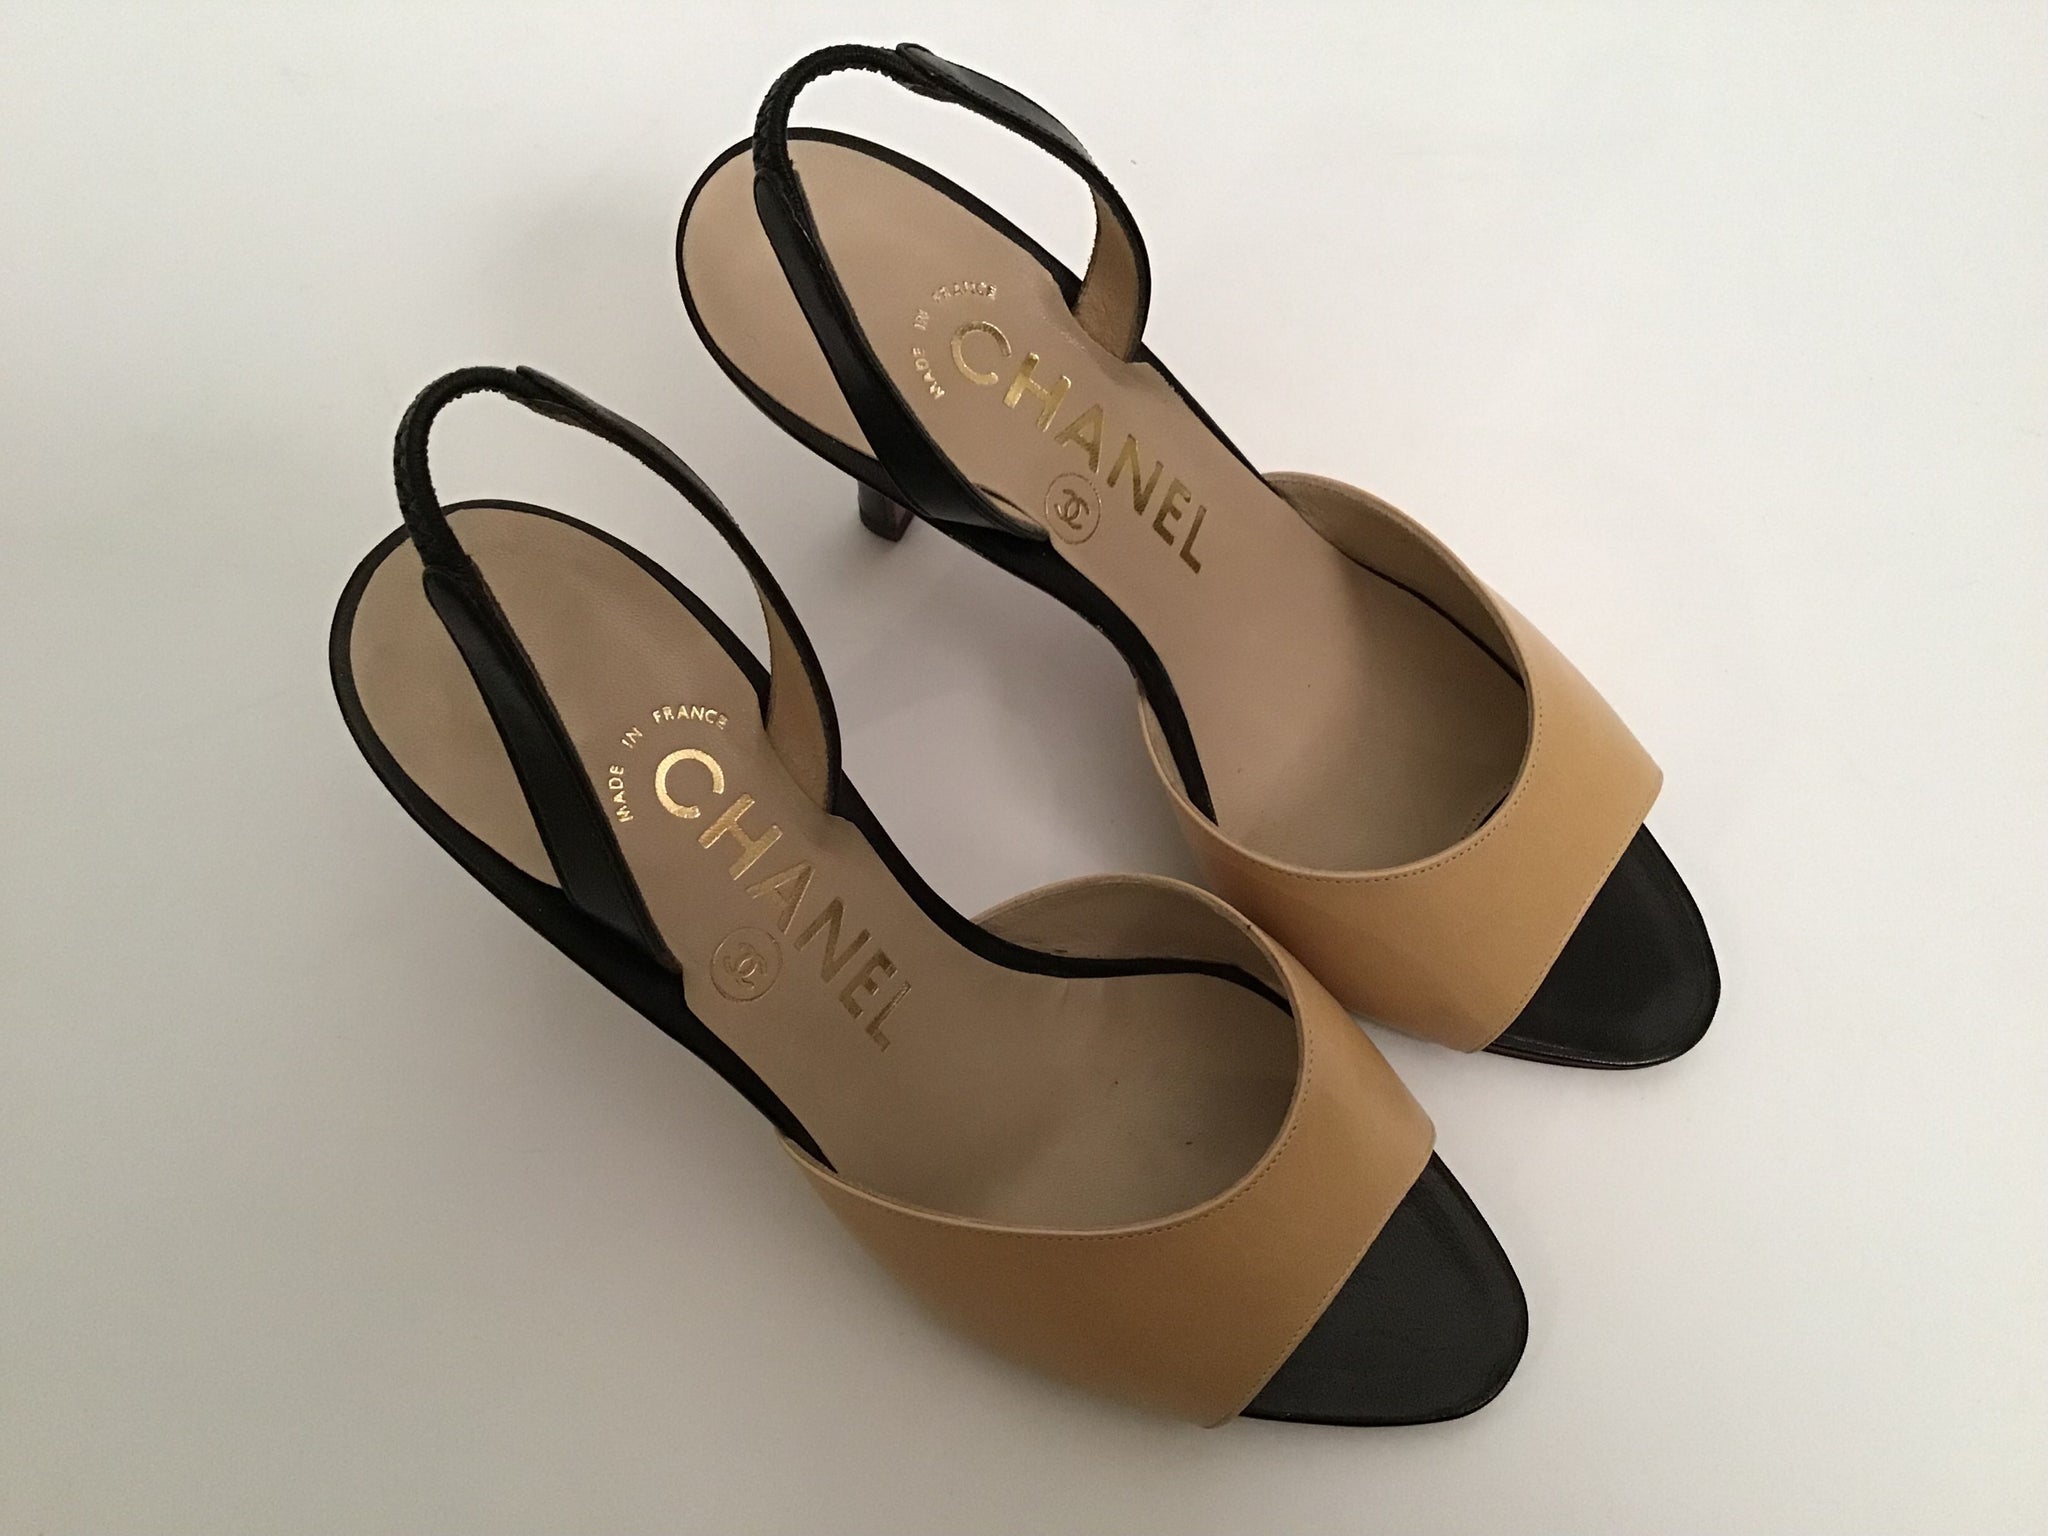 New Chanel peep toe sling backs bicolor beige tan black heel